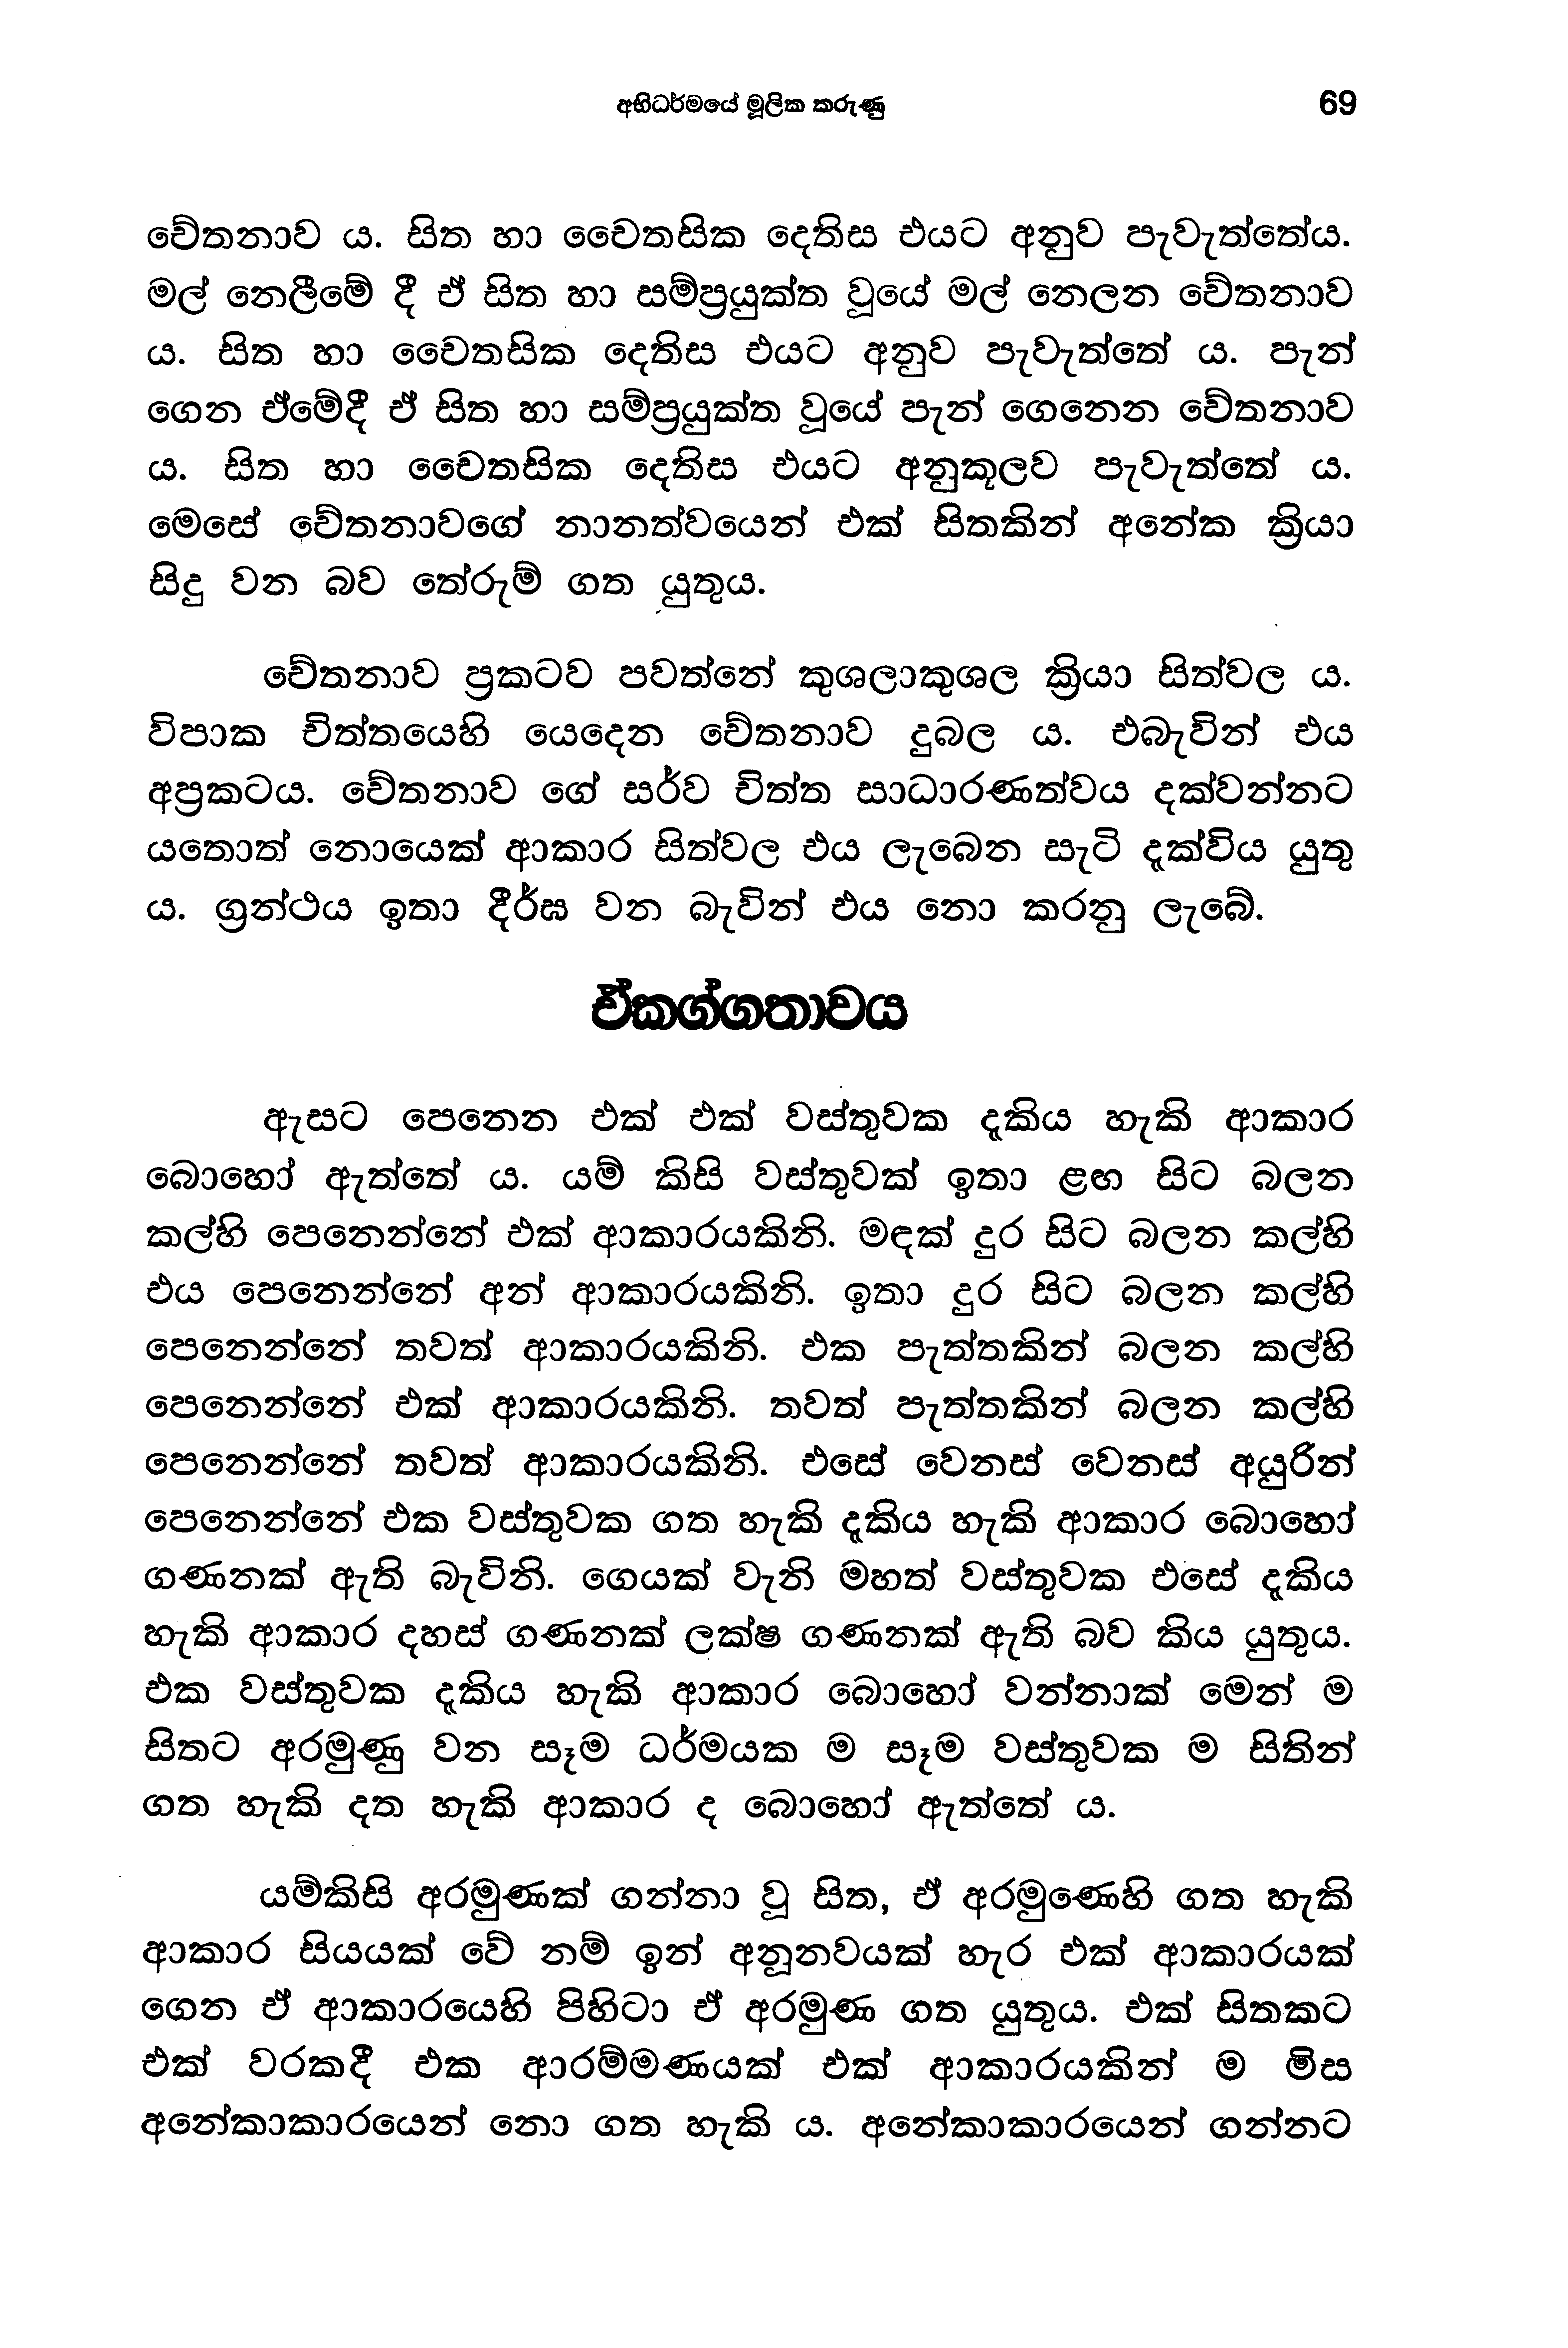 abhidharmaye-mulika-karunu-rerukane-chandavimala-nahimi-full-book-with-comments-highlights-and-book-marks_page_067